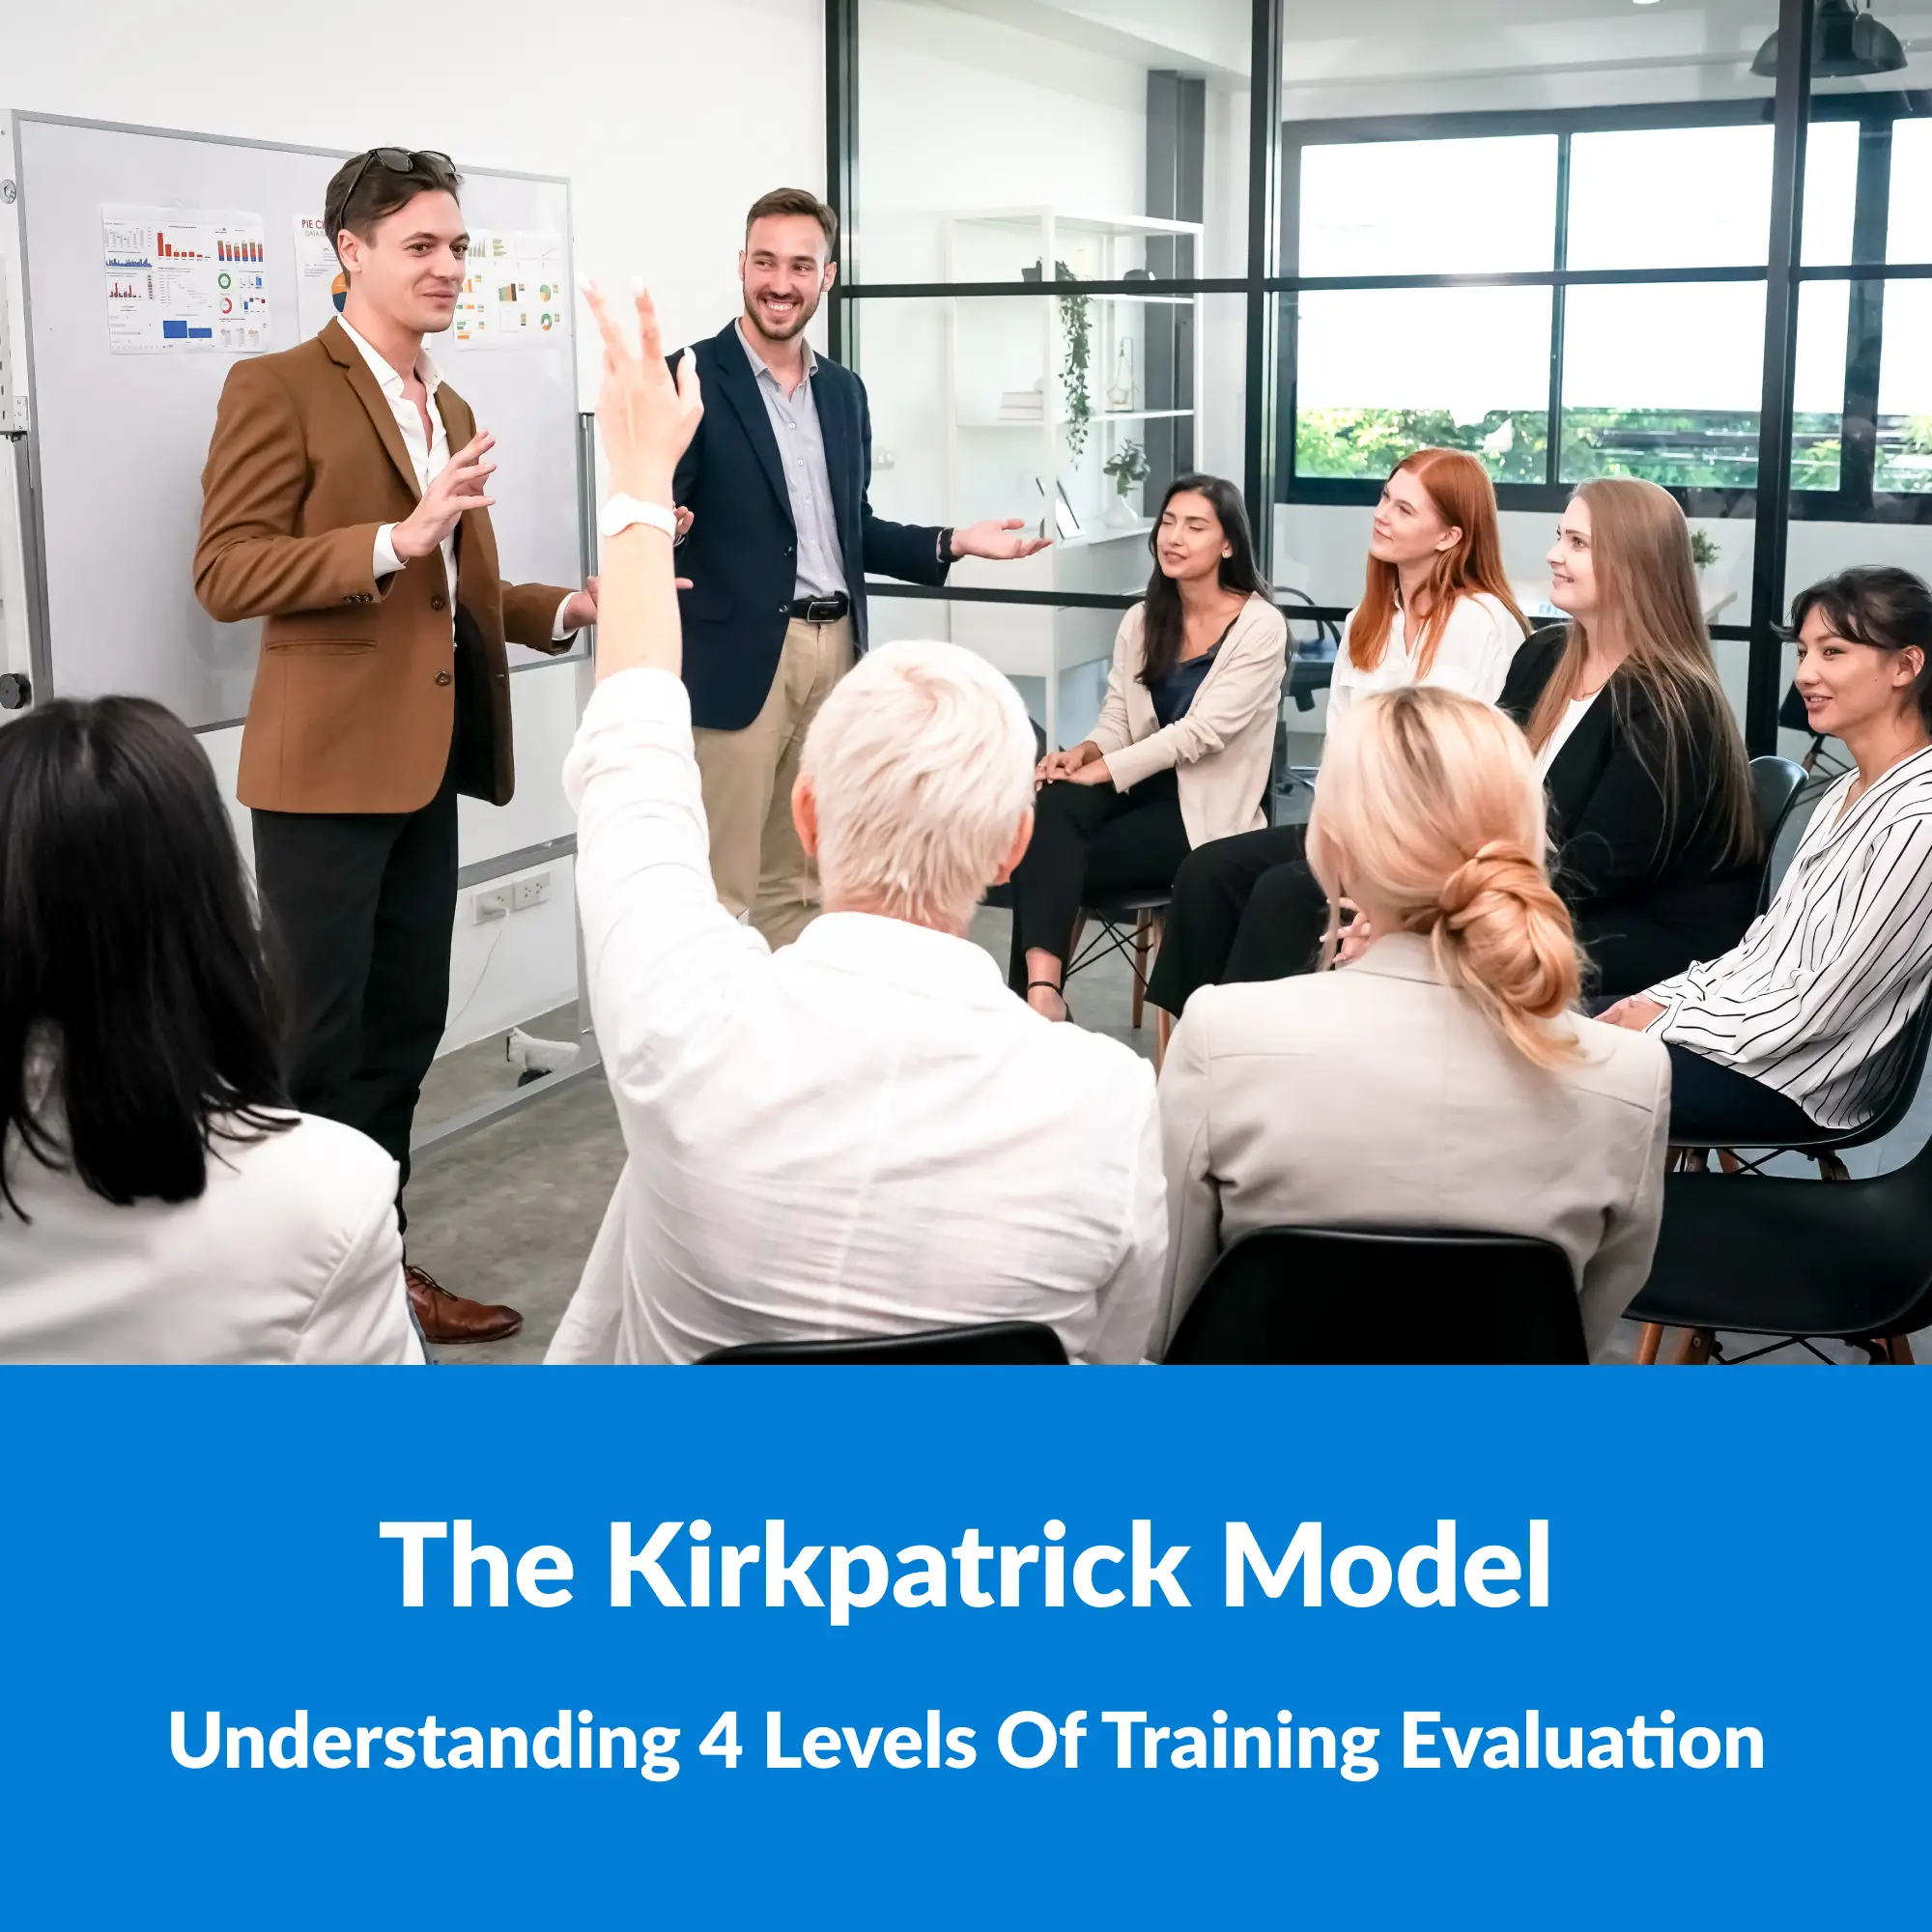 The Kirkpatrick Model: 4 Levels of Training Evaluation